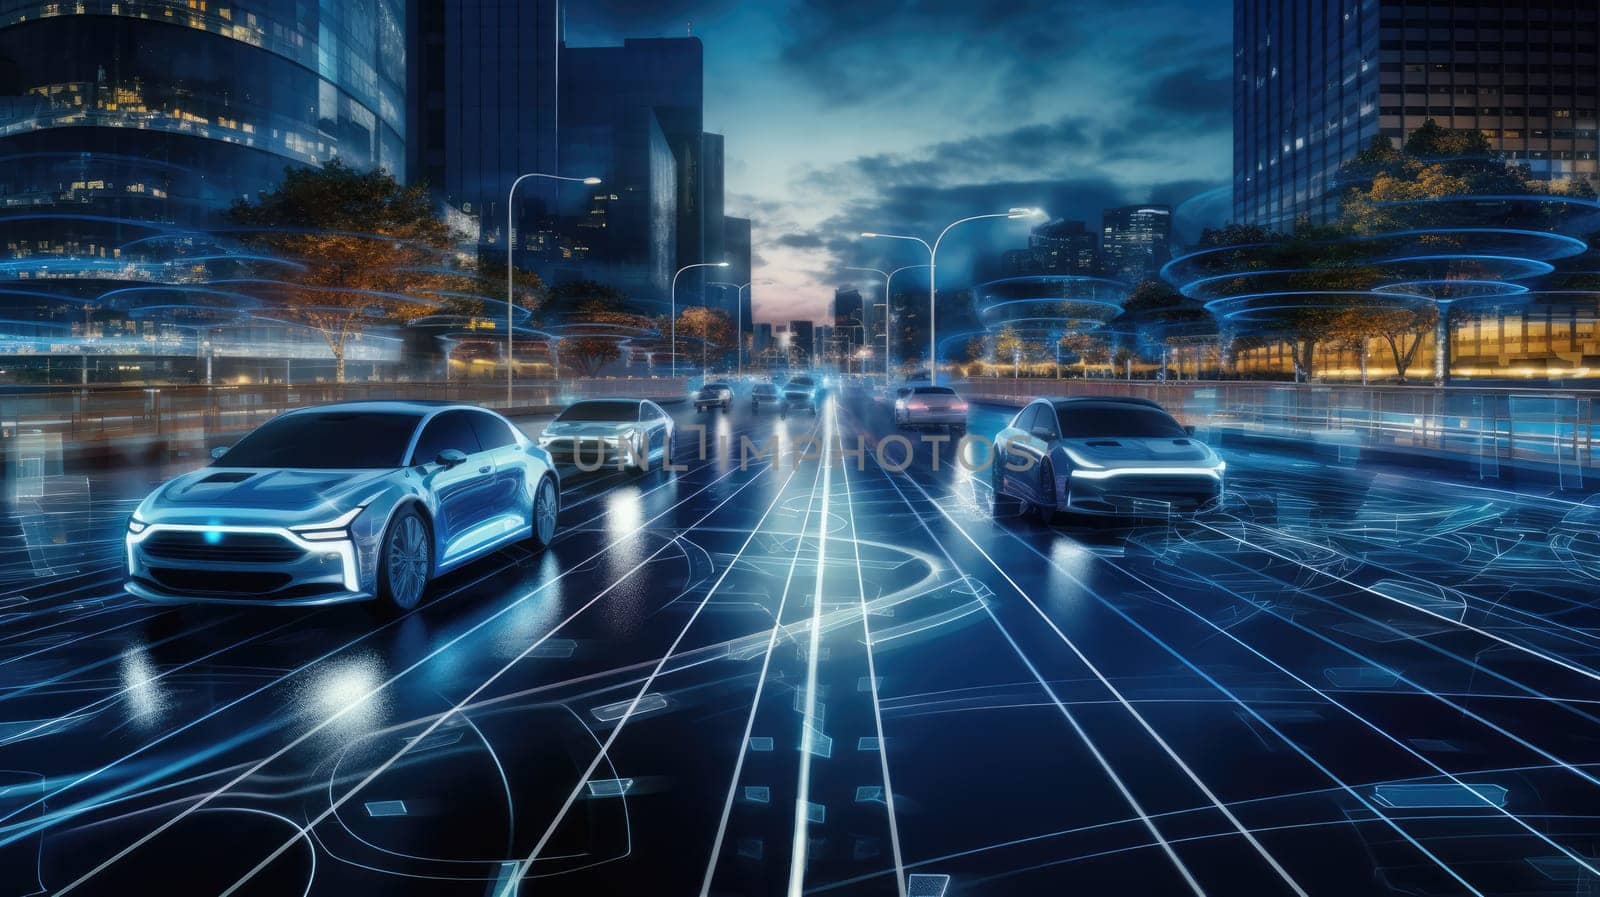 Driverless car. Autonomous cars on the road using AI technologies